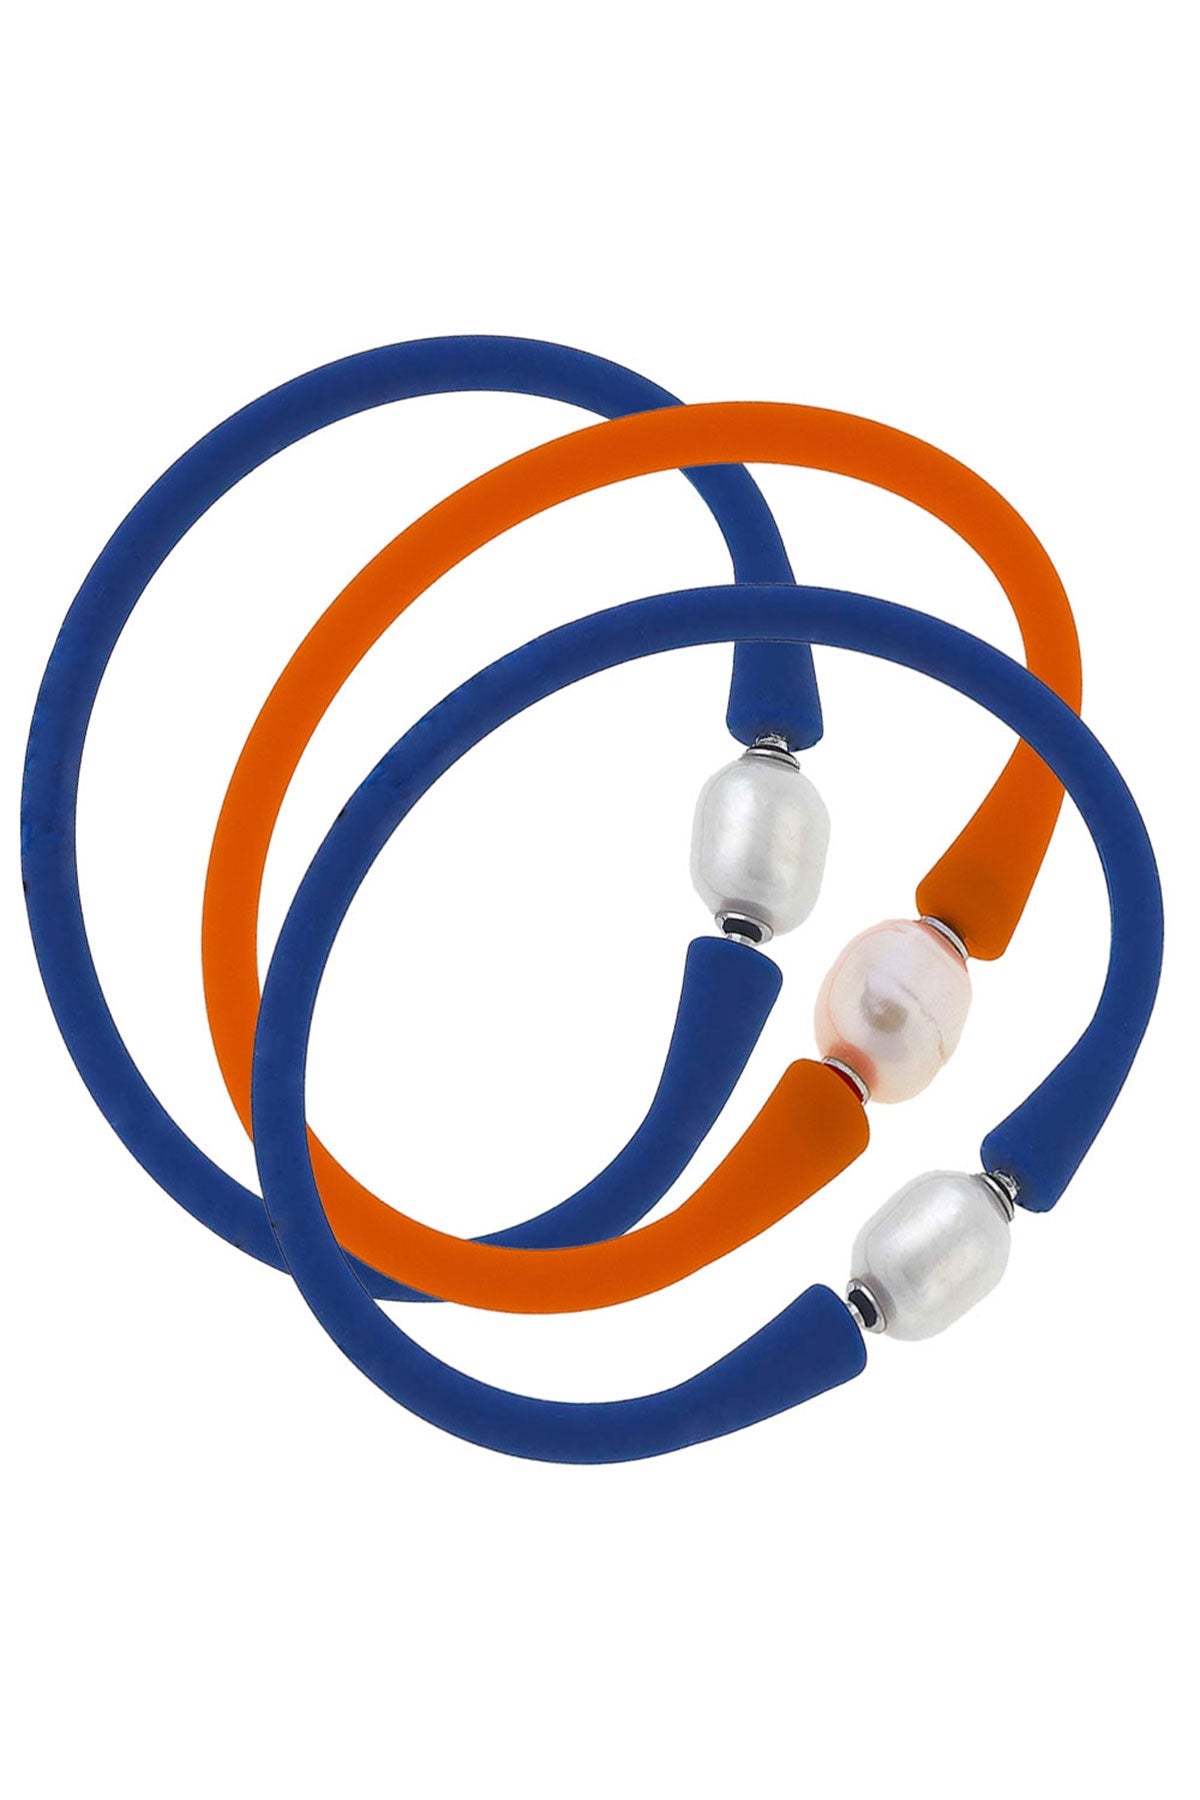 Bali Game Day Freshwater Pearl Bracelet Set of 3 in Royal Blue & Orange